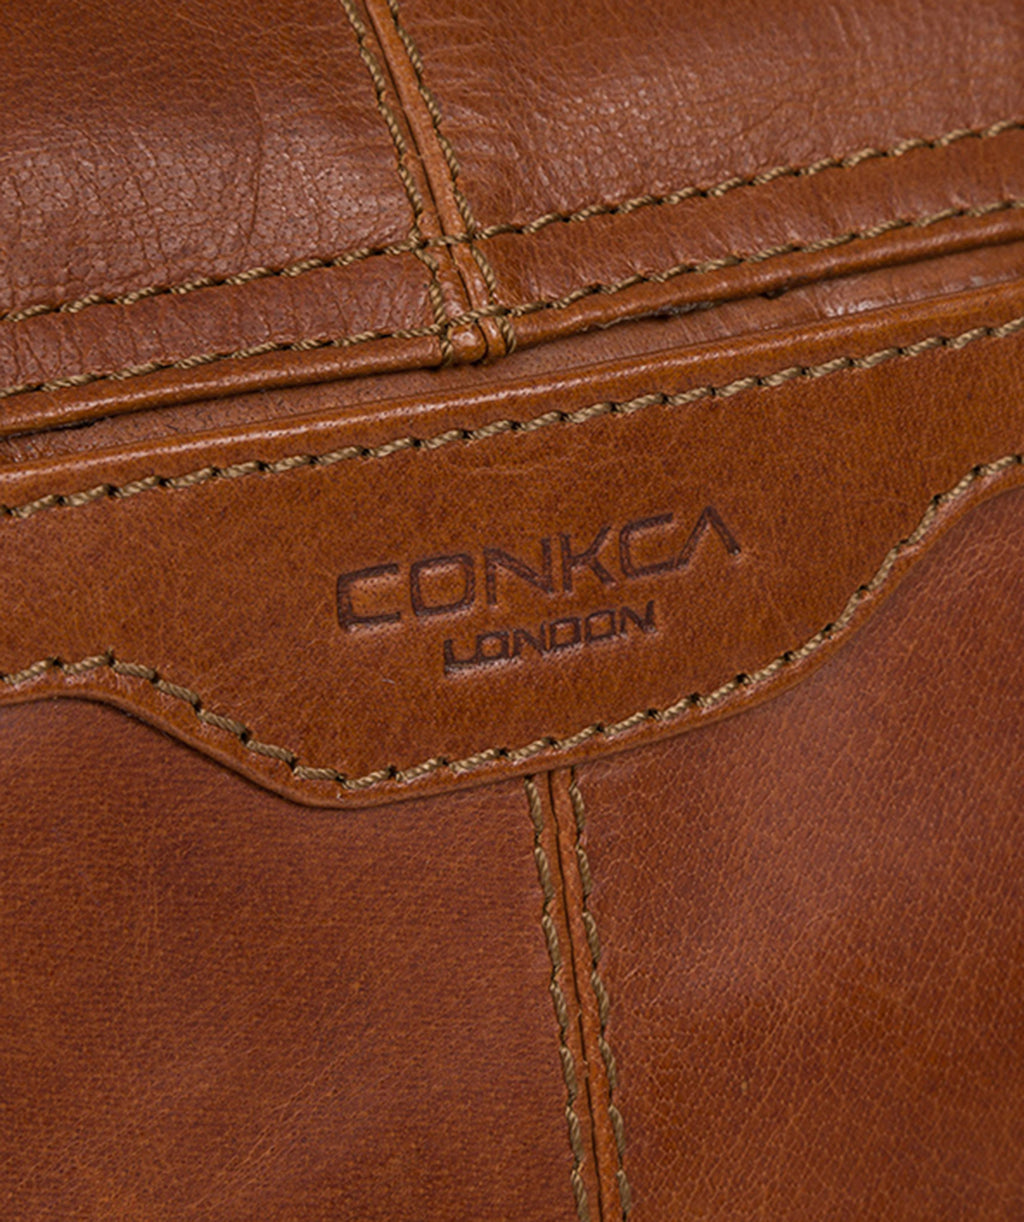 Chestnut Leather Messenger Bag 'Bermondsey' by Conkca London – Pure ...